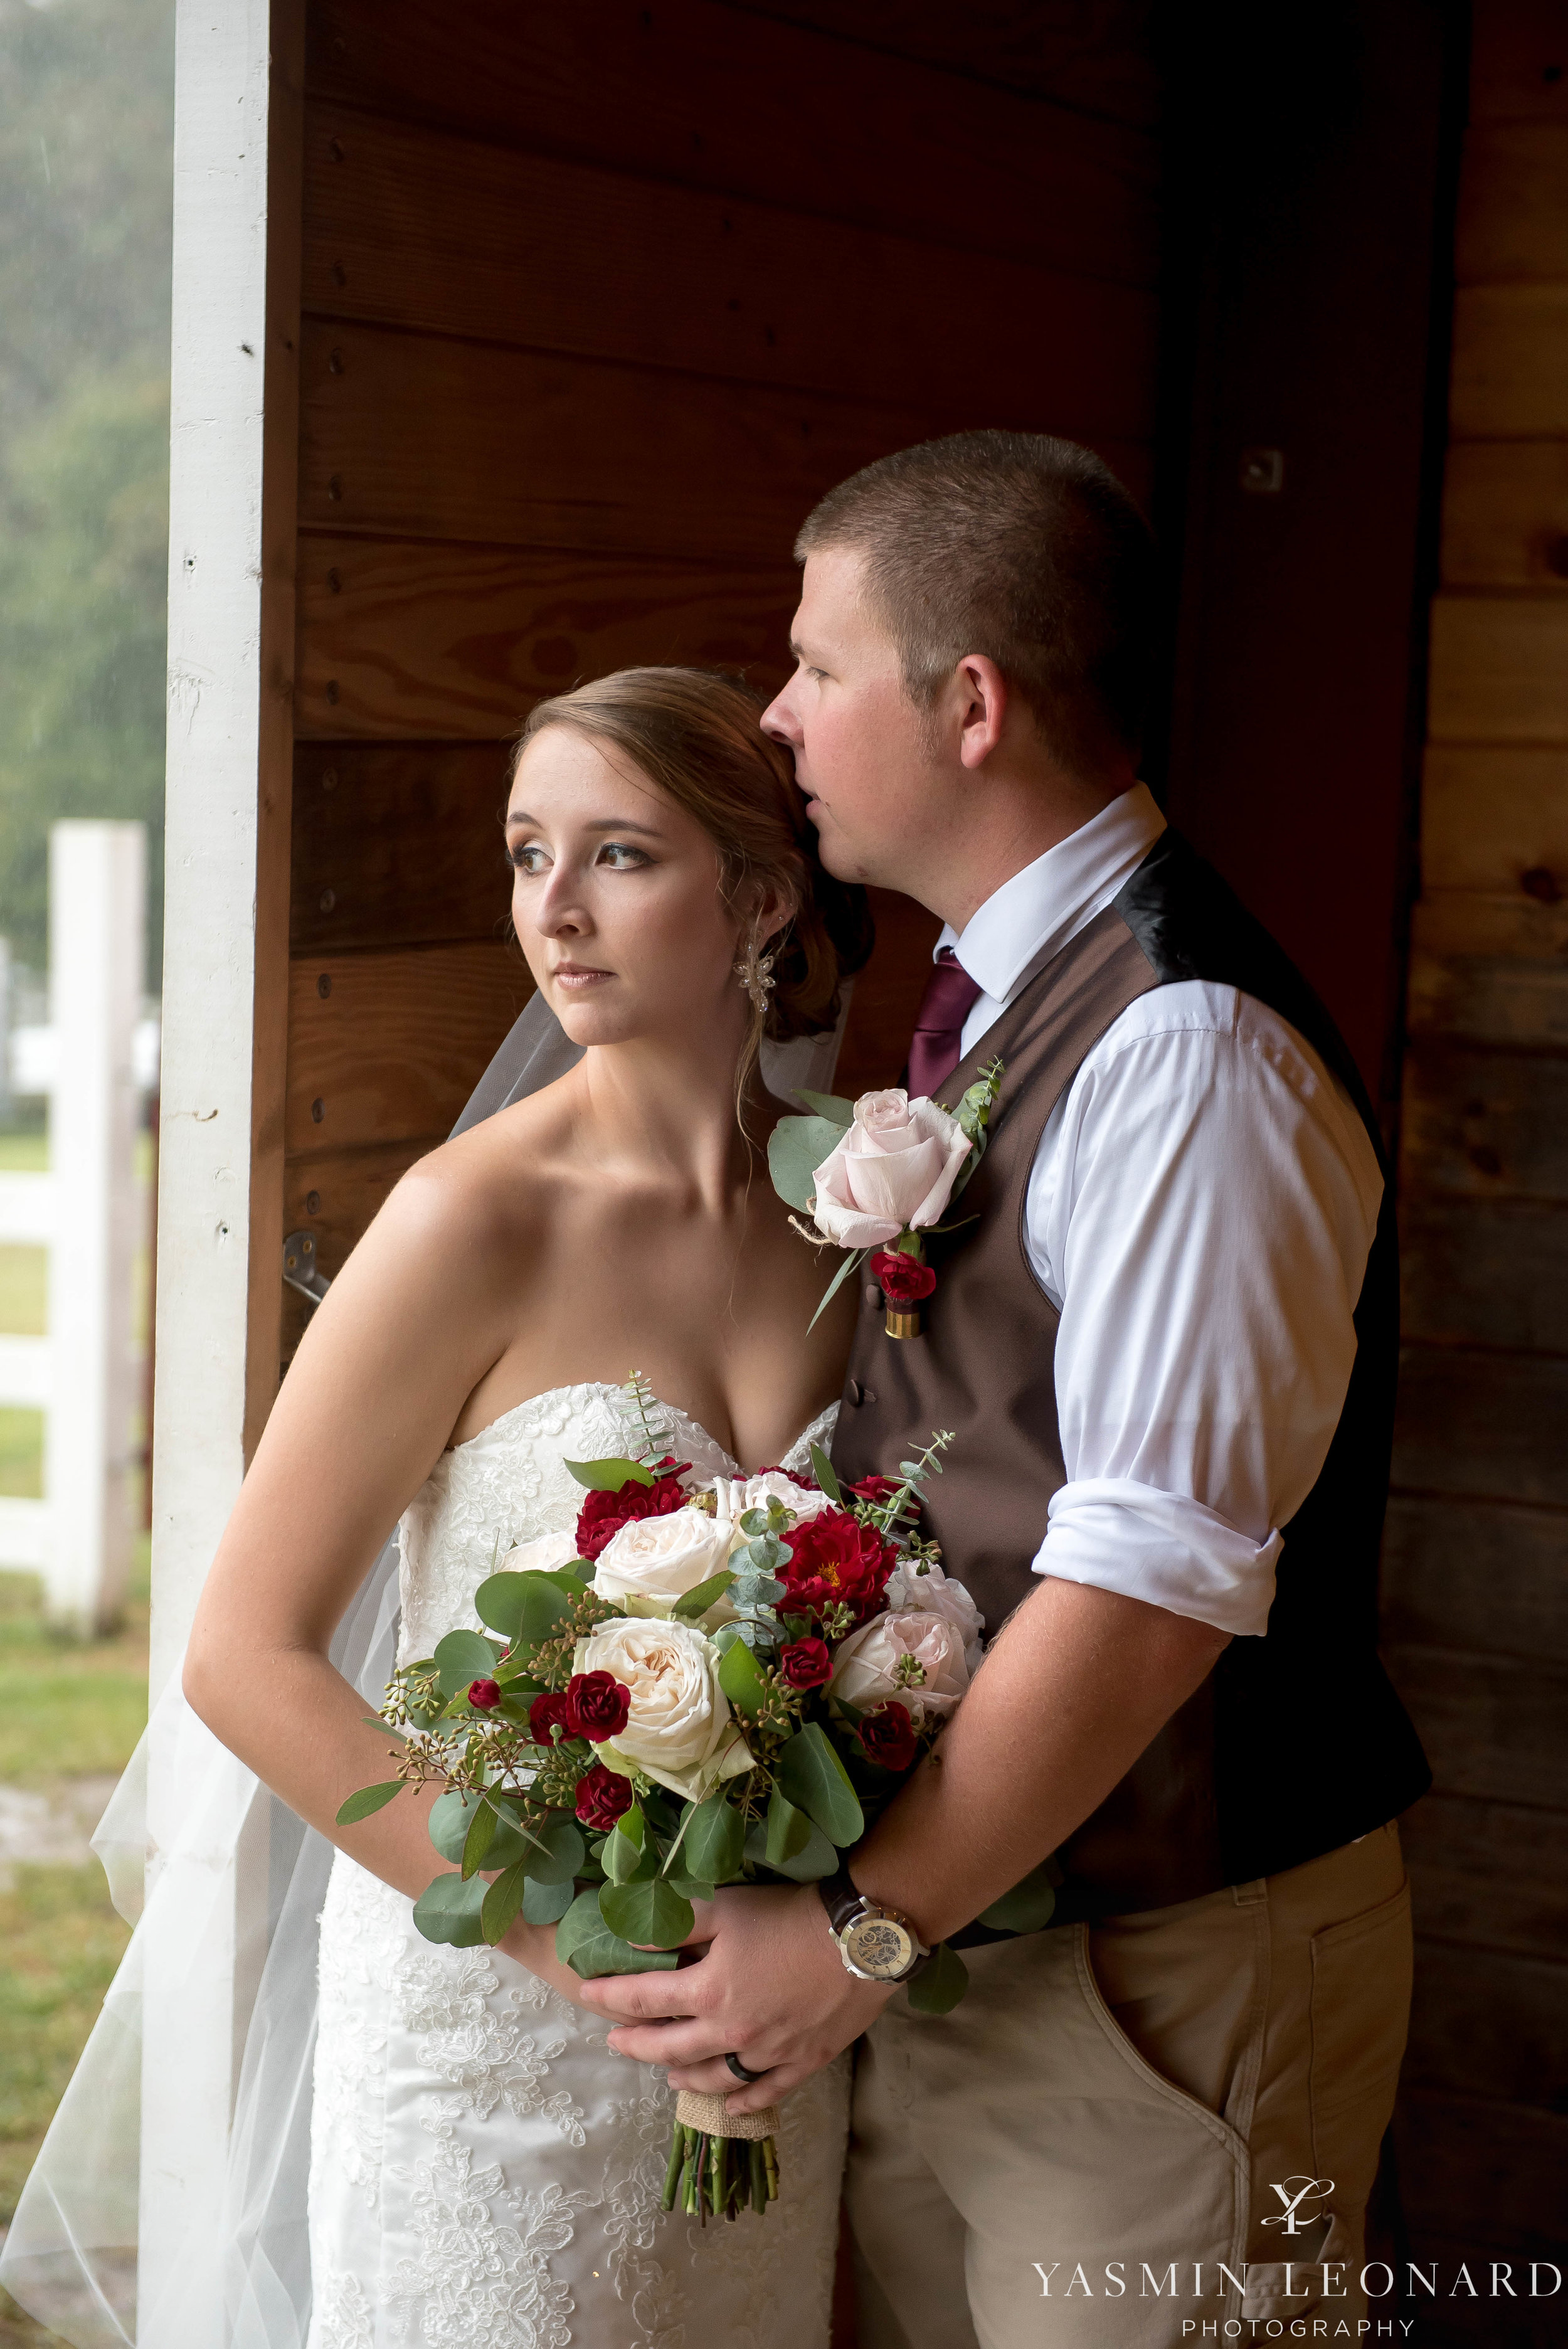 Millikan Farms - NC Wedding Venue - NC Wedding Photographer - Yasmin Leonard Photography - Rain on your wedding day-44.jpg